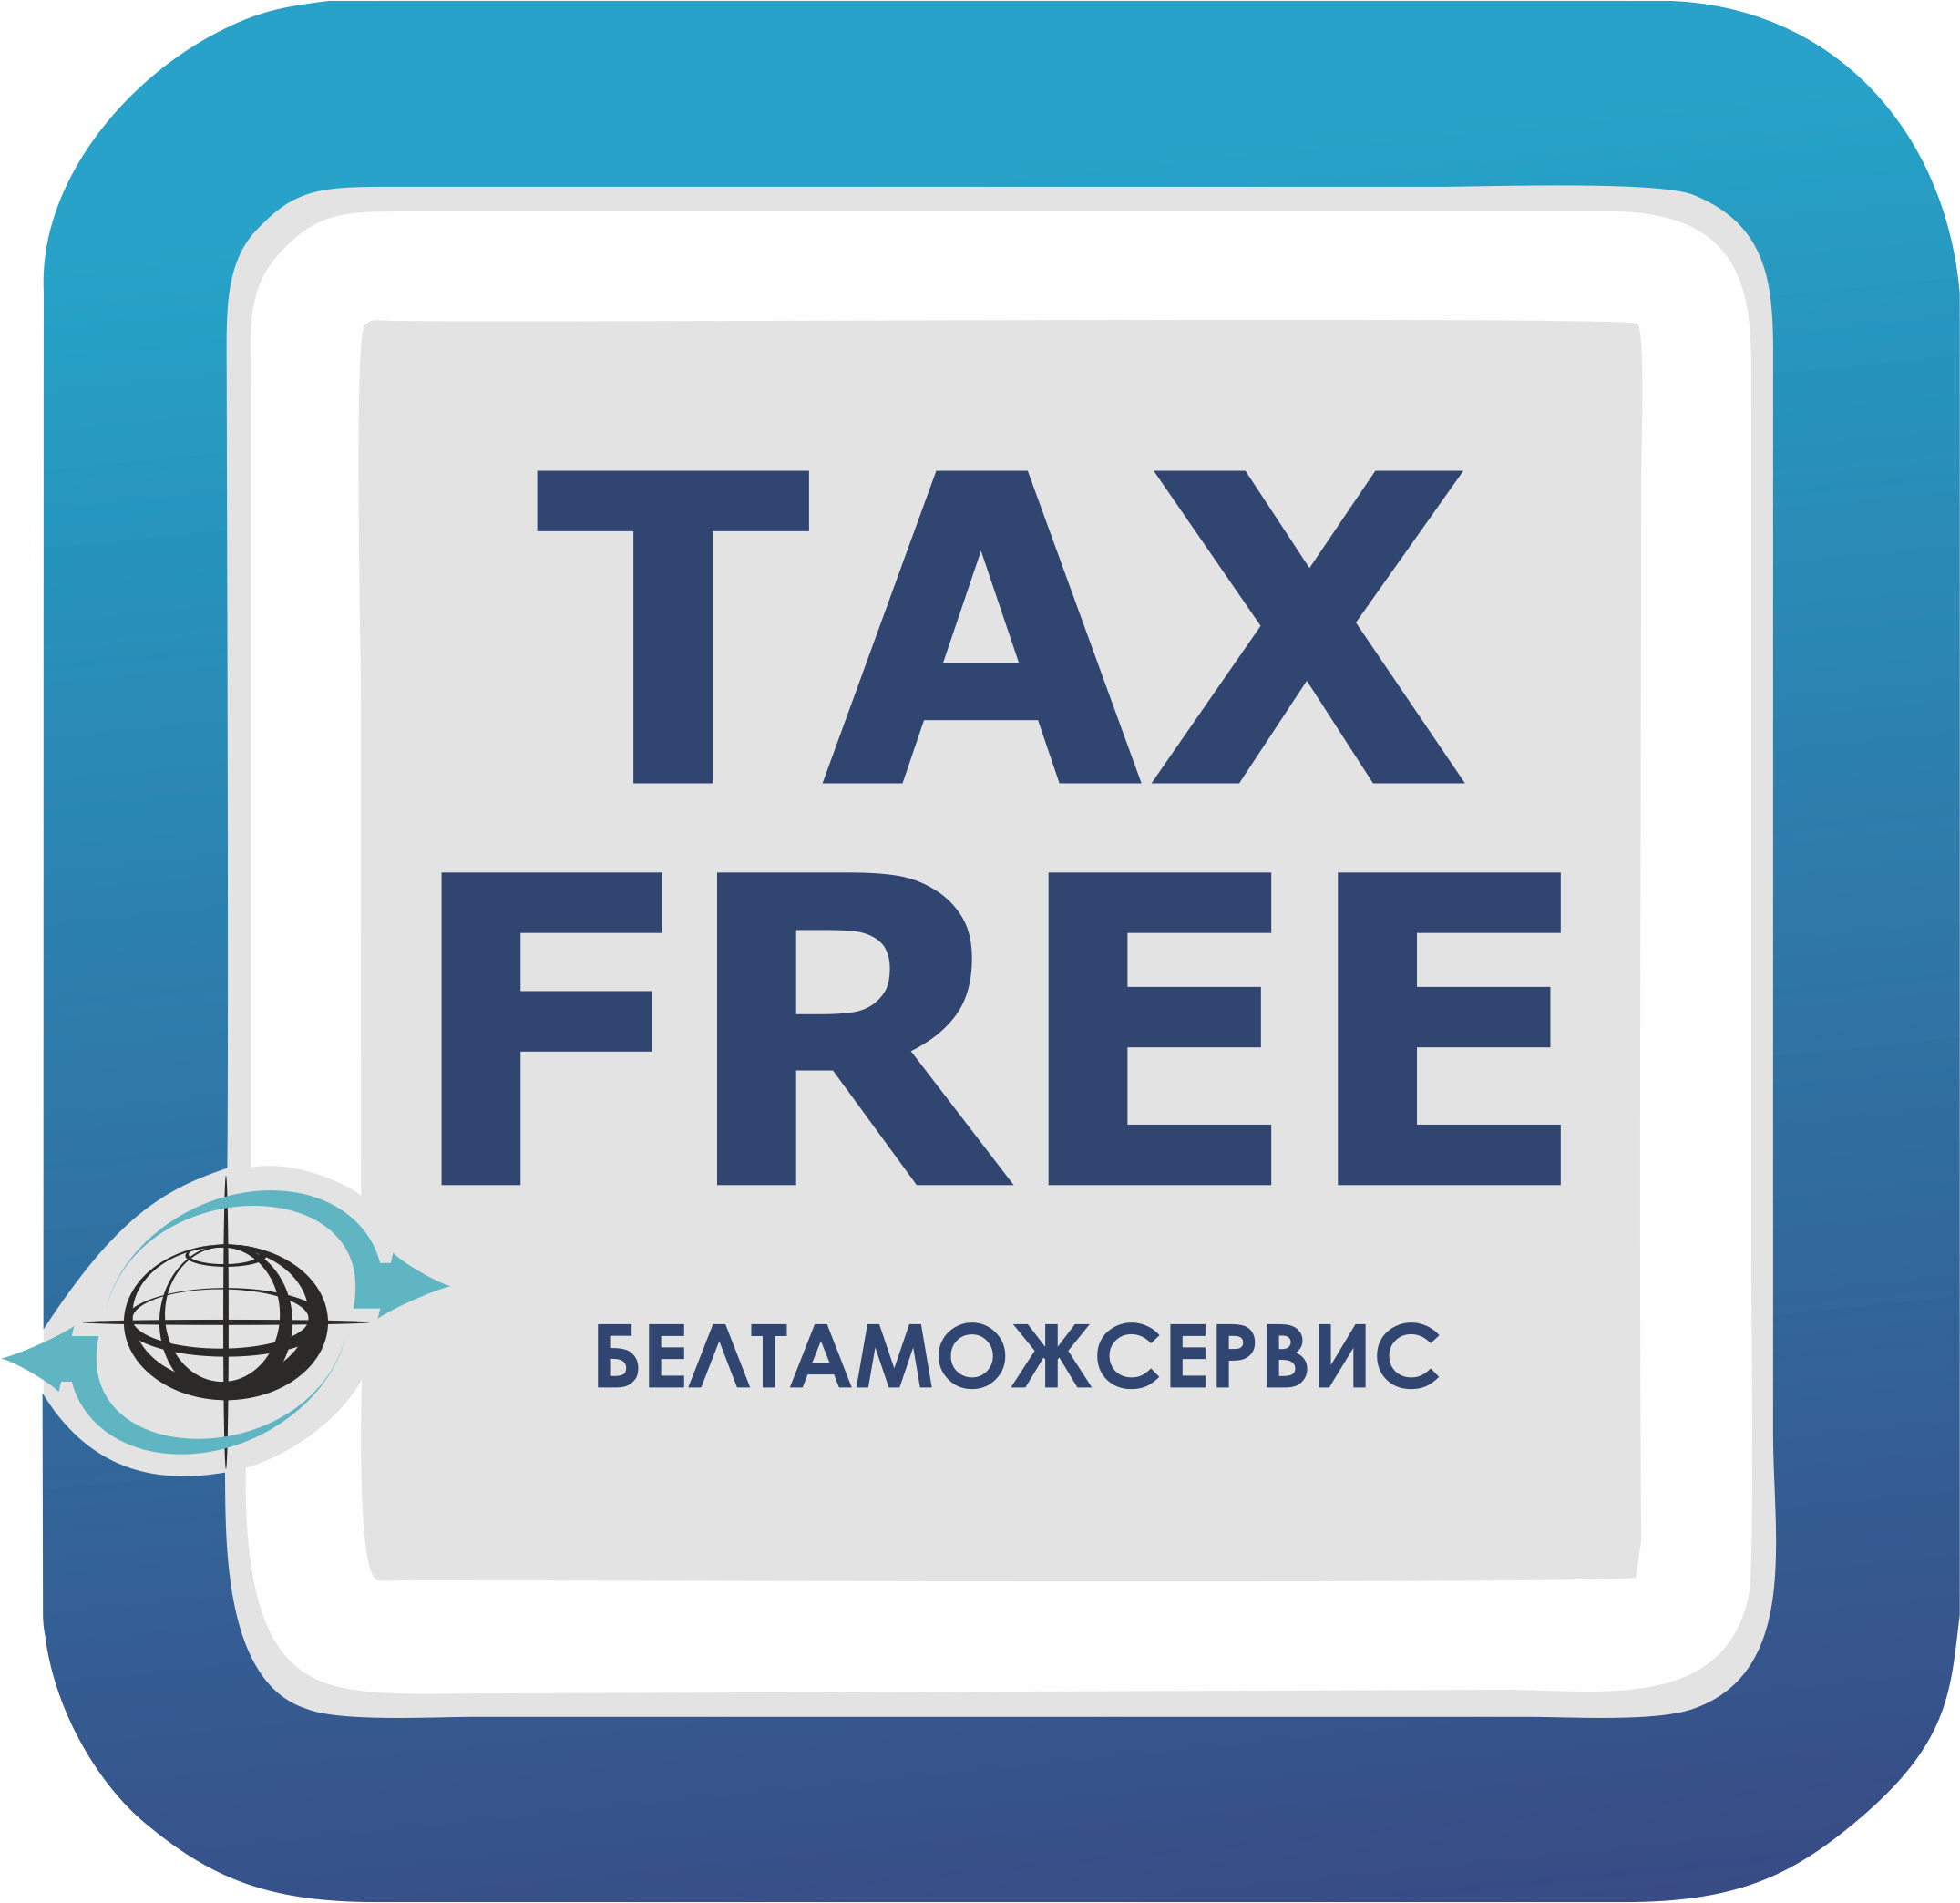 Что такое Tax Free в Беларуси?